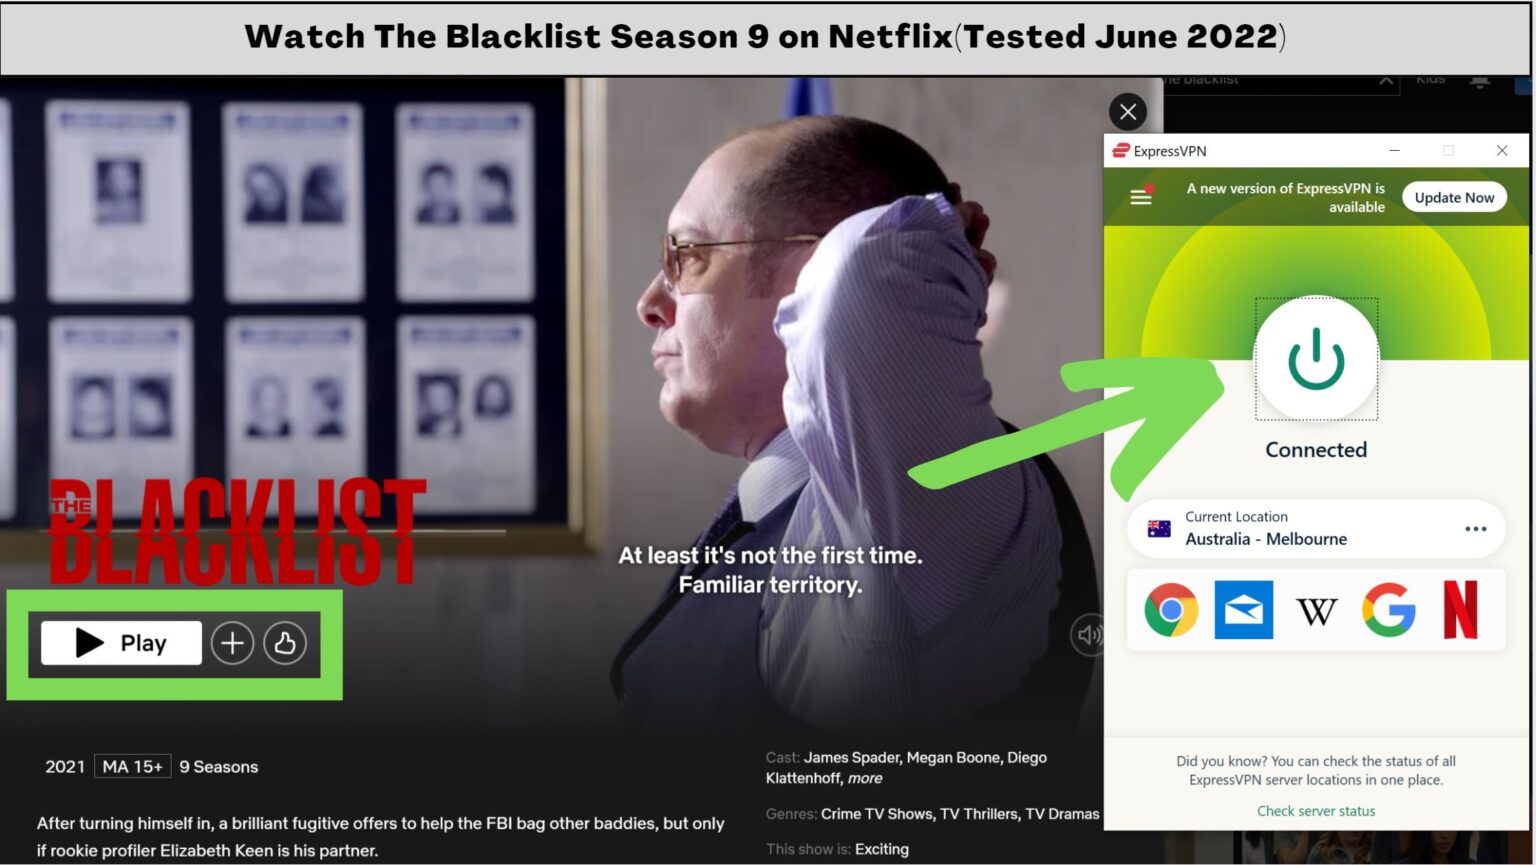 How To Watch The Blacklist Season 9 On Netflix| 2 Min Guide